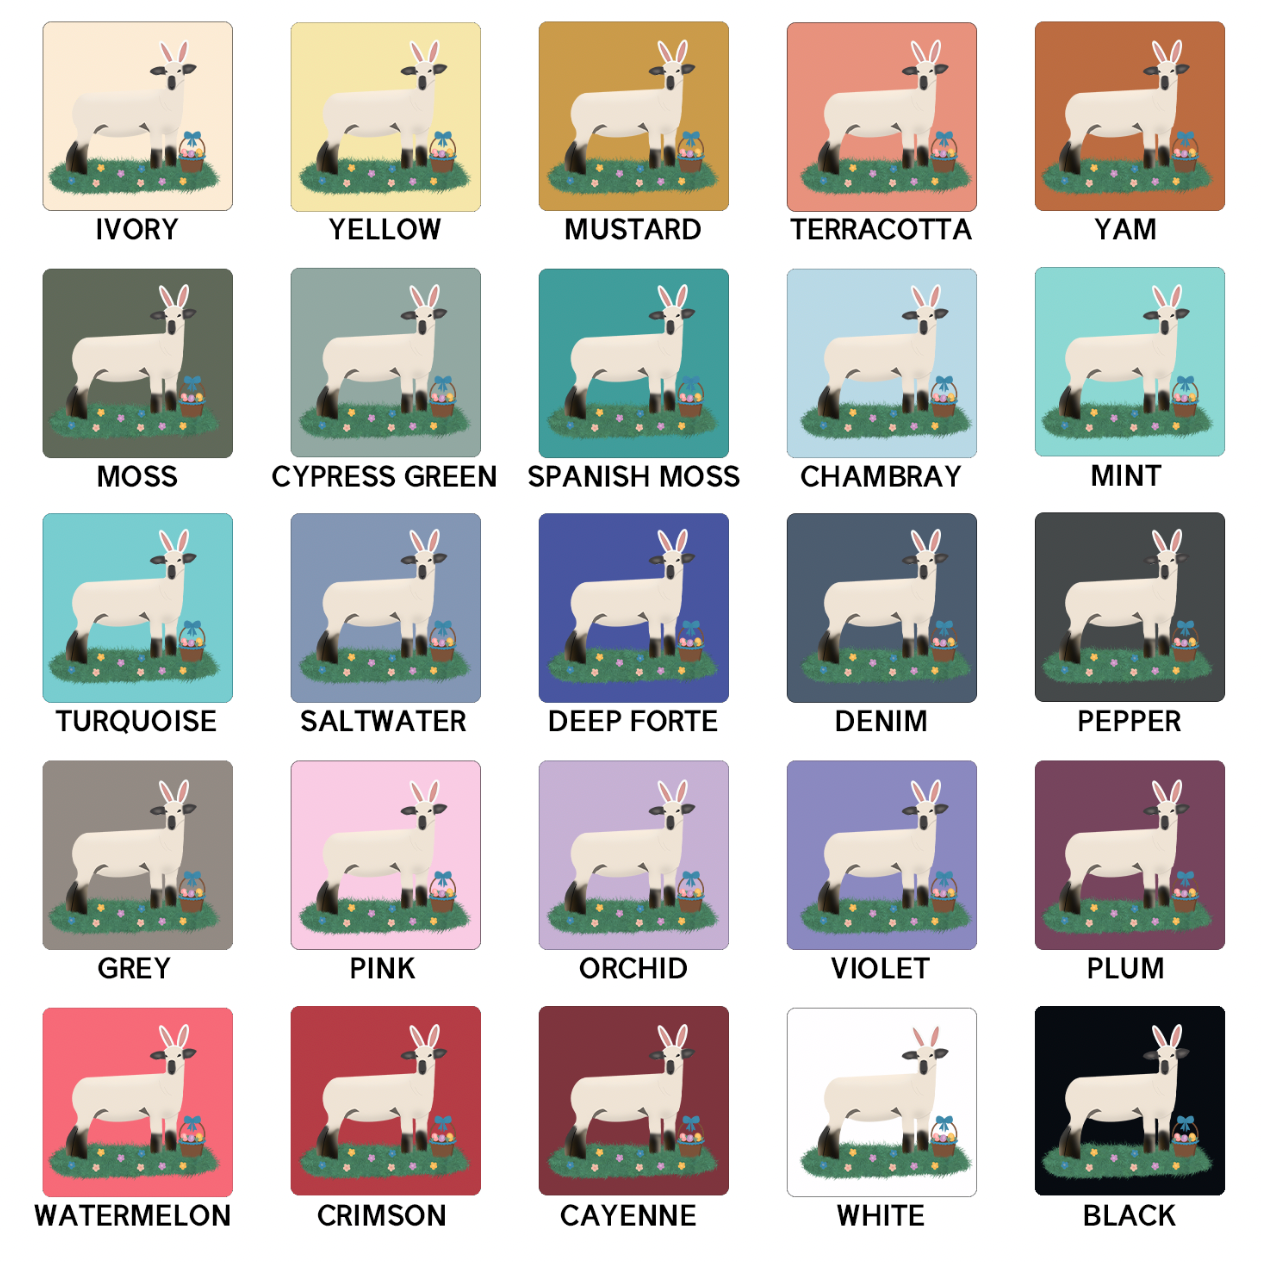 Easter Lamb ComfortWash/ComfortColor T-Shirt (S-4XL) - Multiple Colors!